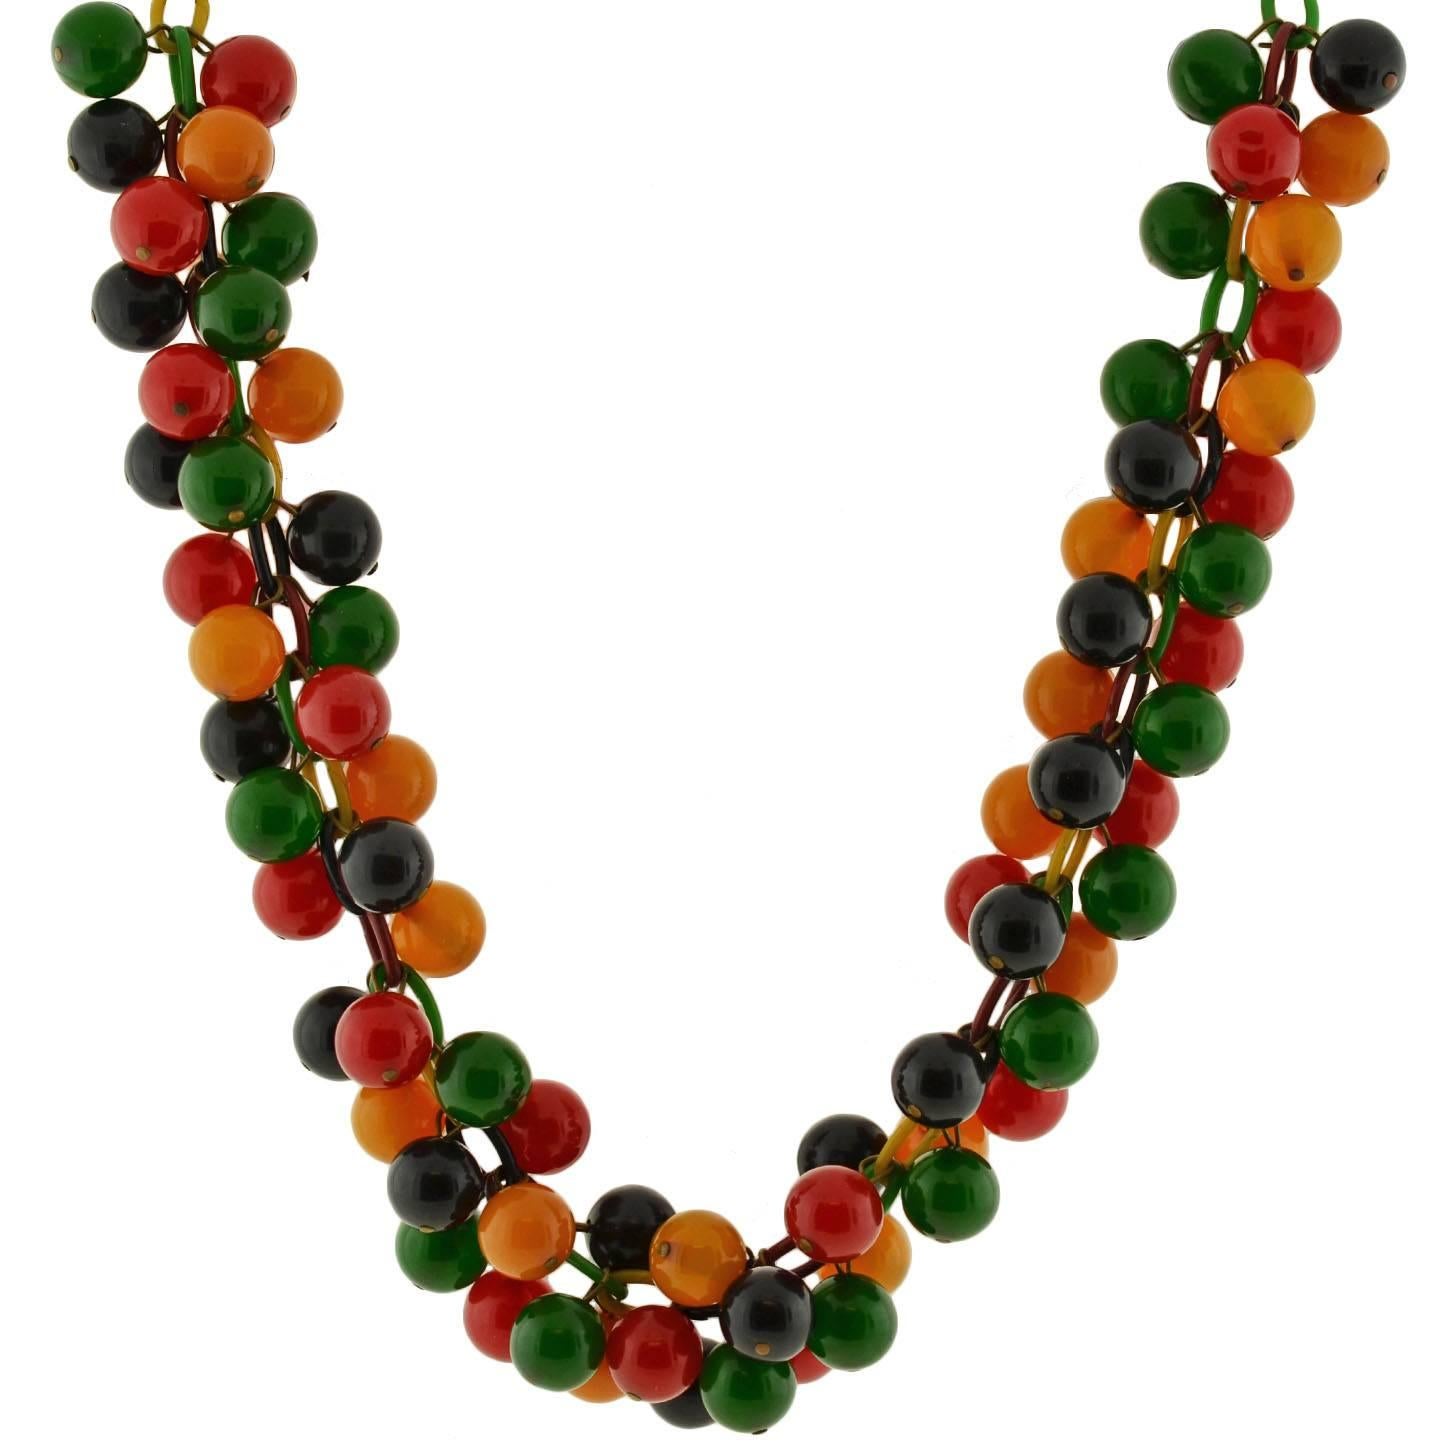 Retro Multi-Colored Bakelite and Celluloid Necklace